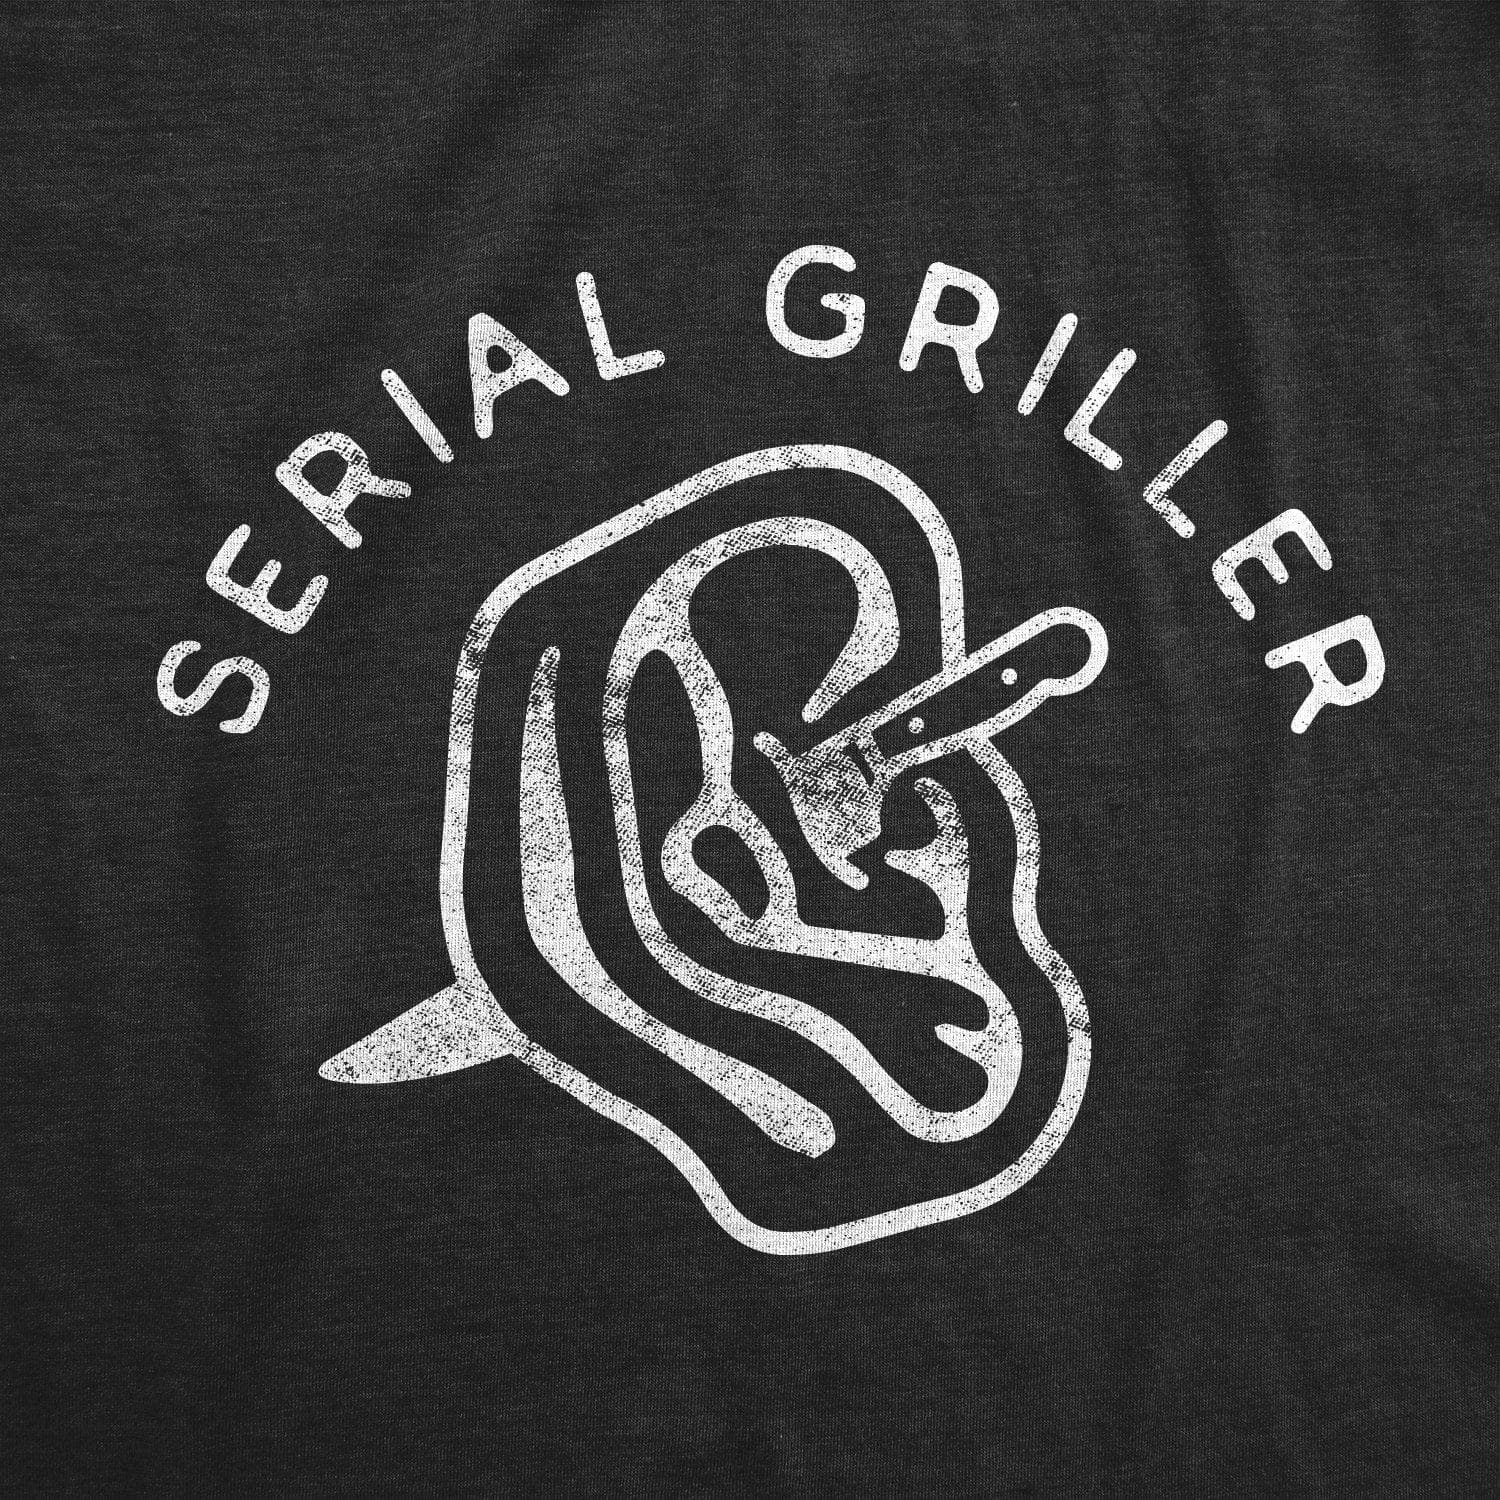 Serial Griller Men's Tshirt - Crazy Dog T-Shirts